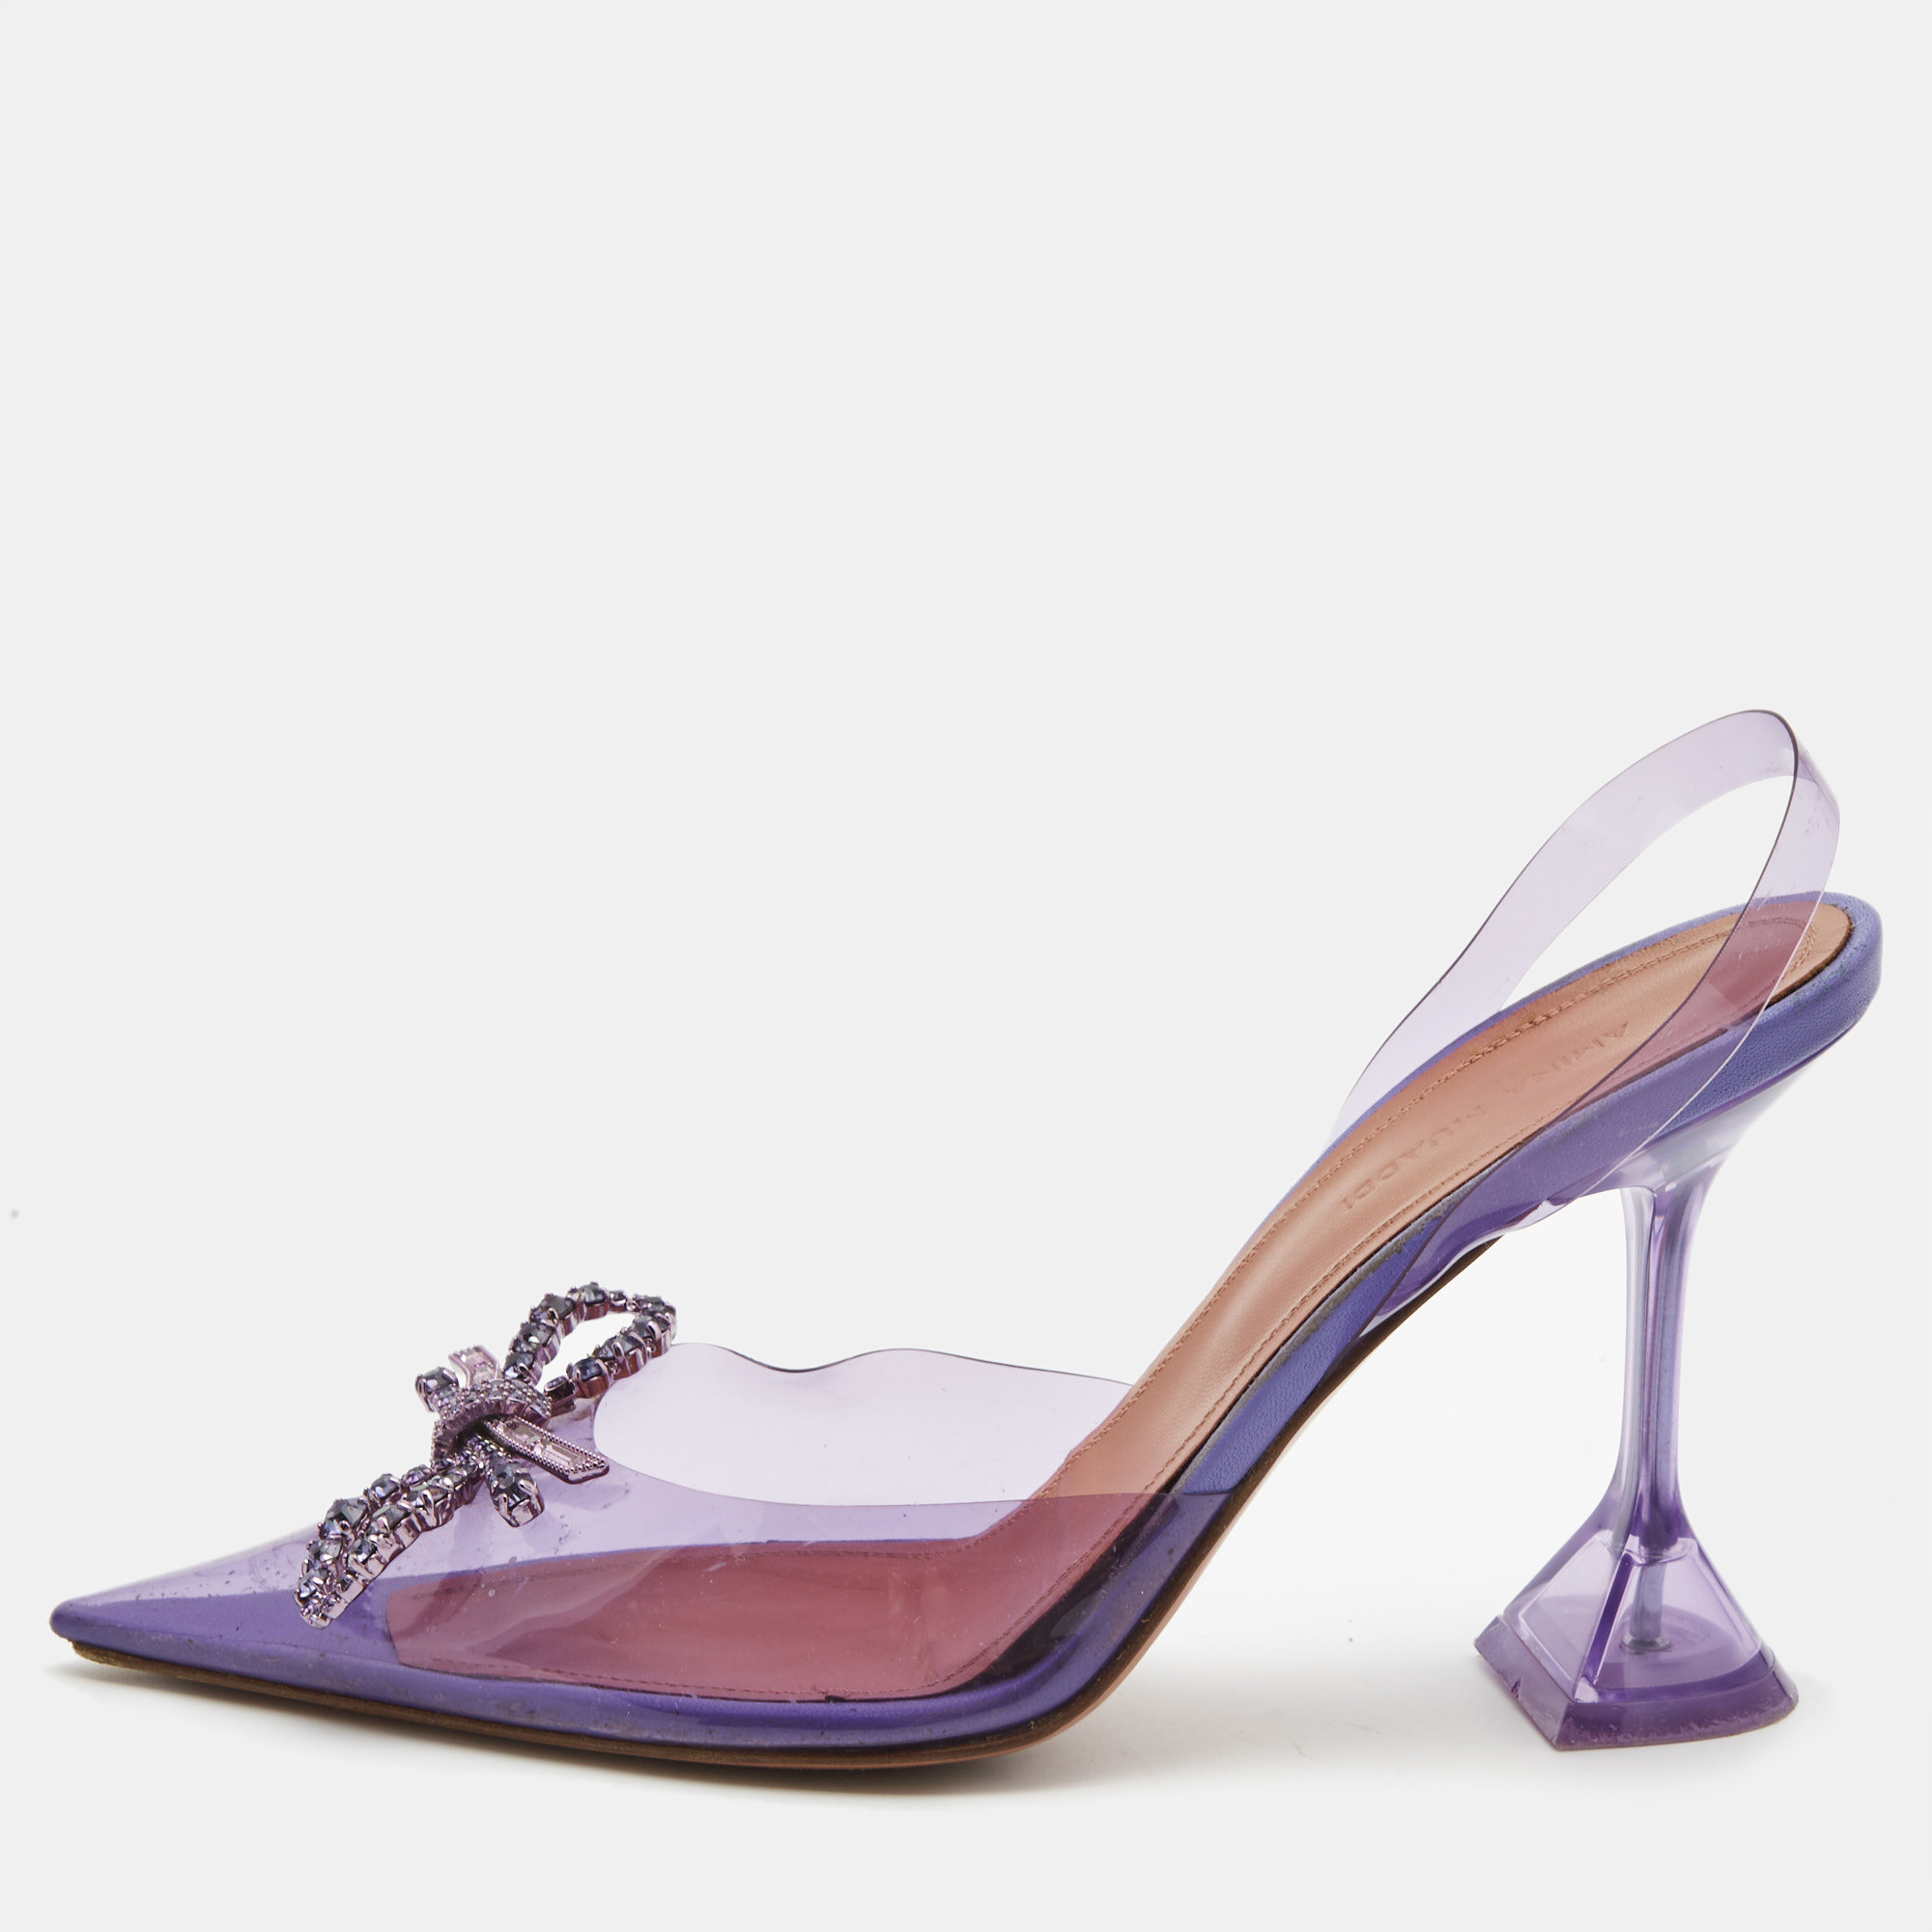 Amina muaddi purple pvc crystal embellished bow slingback pumps size 39